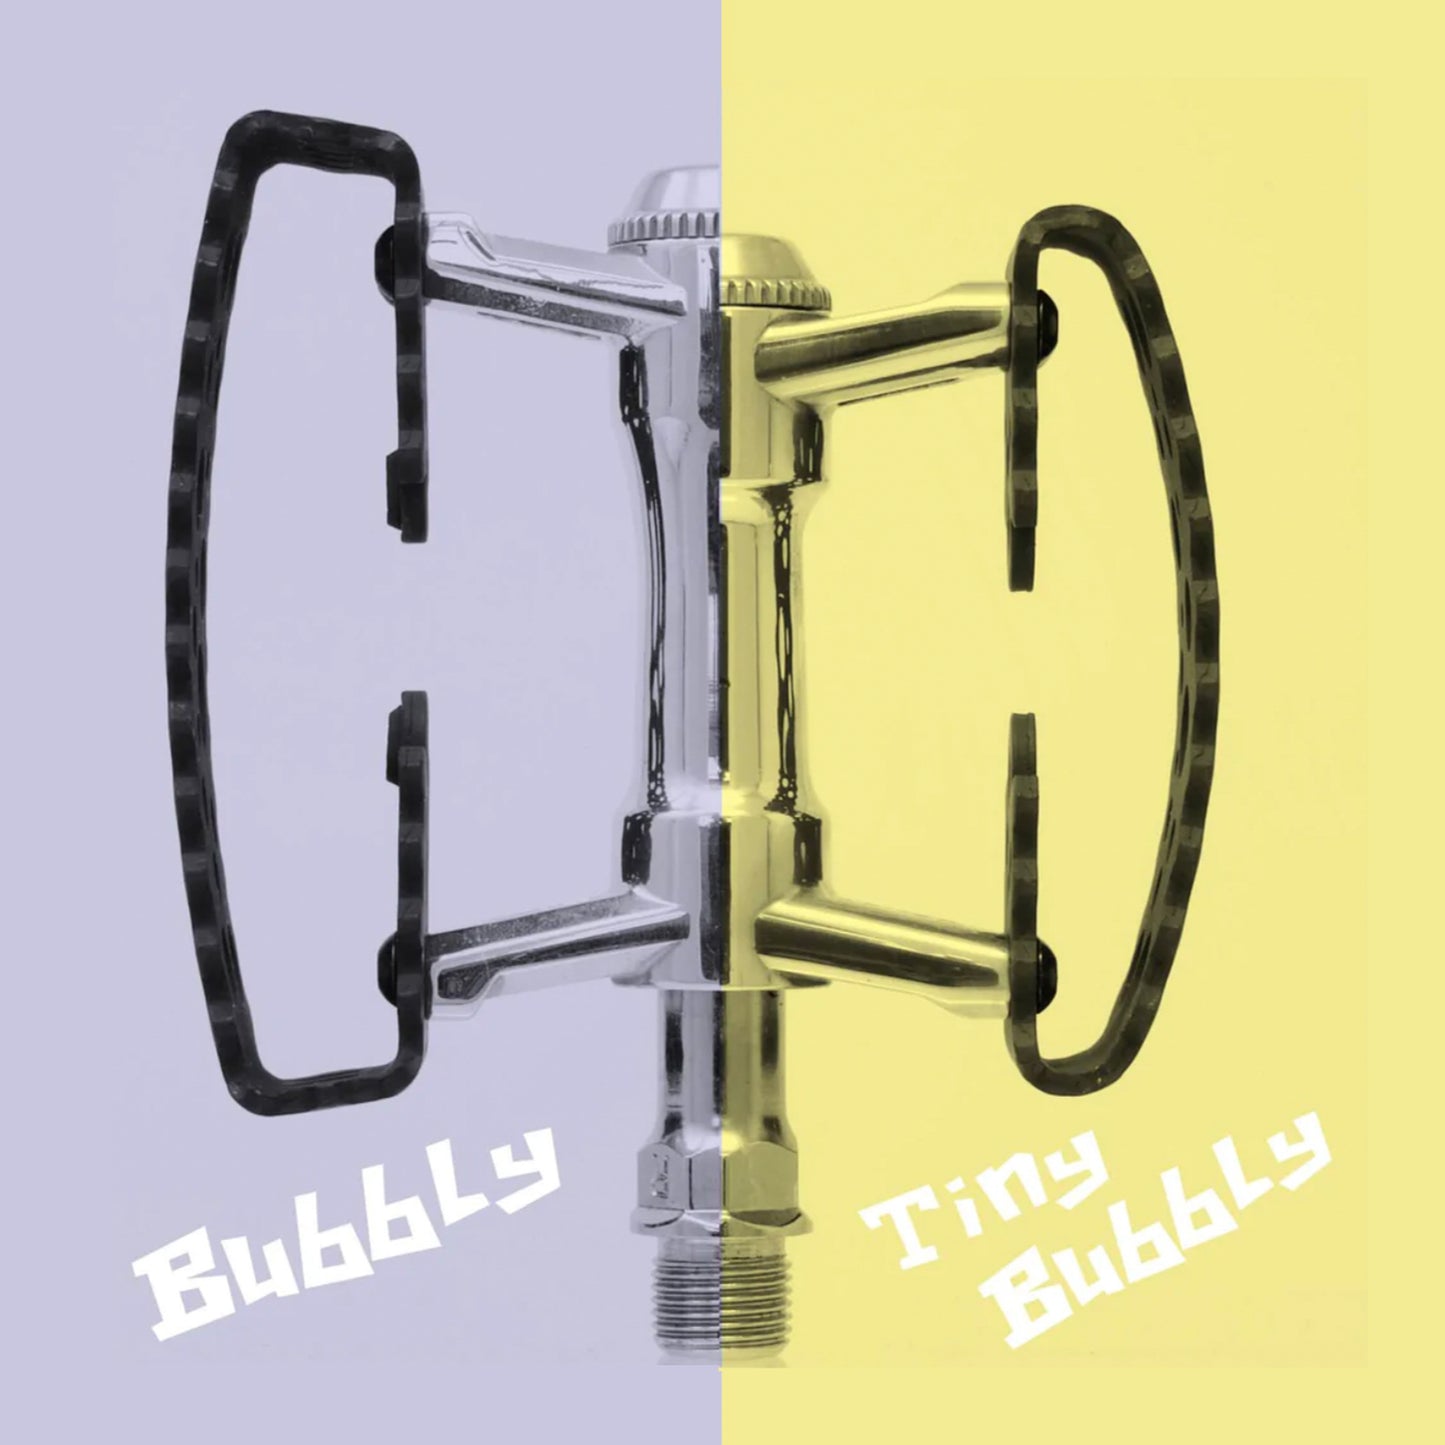 SimWorks x MKS Tiny Bubbly Pedal